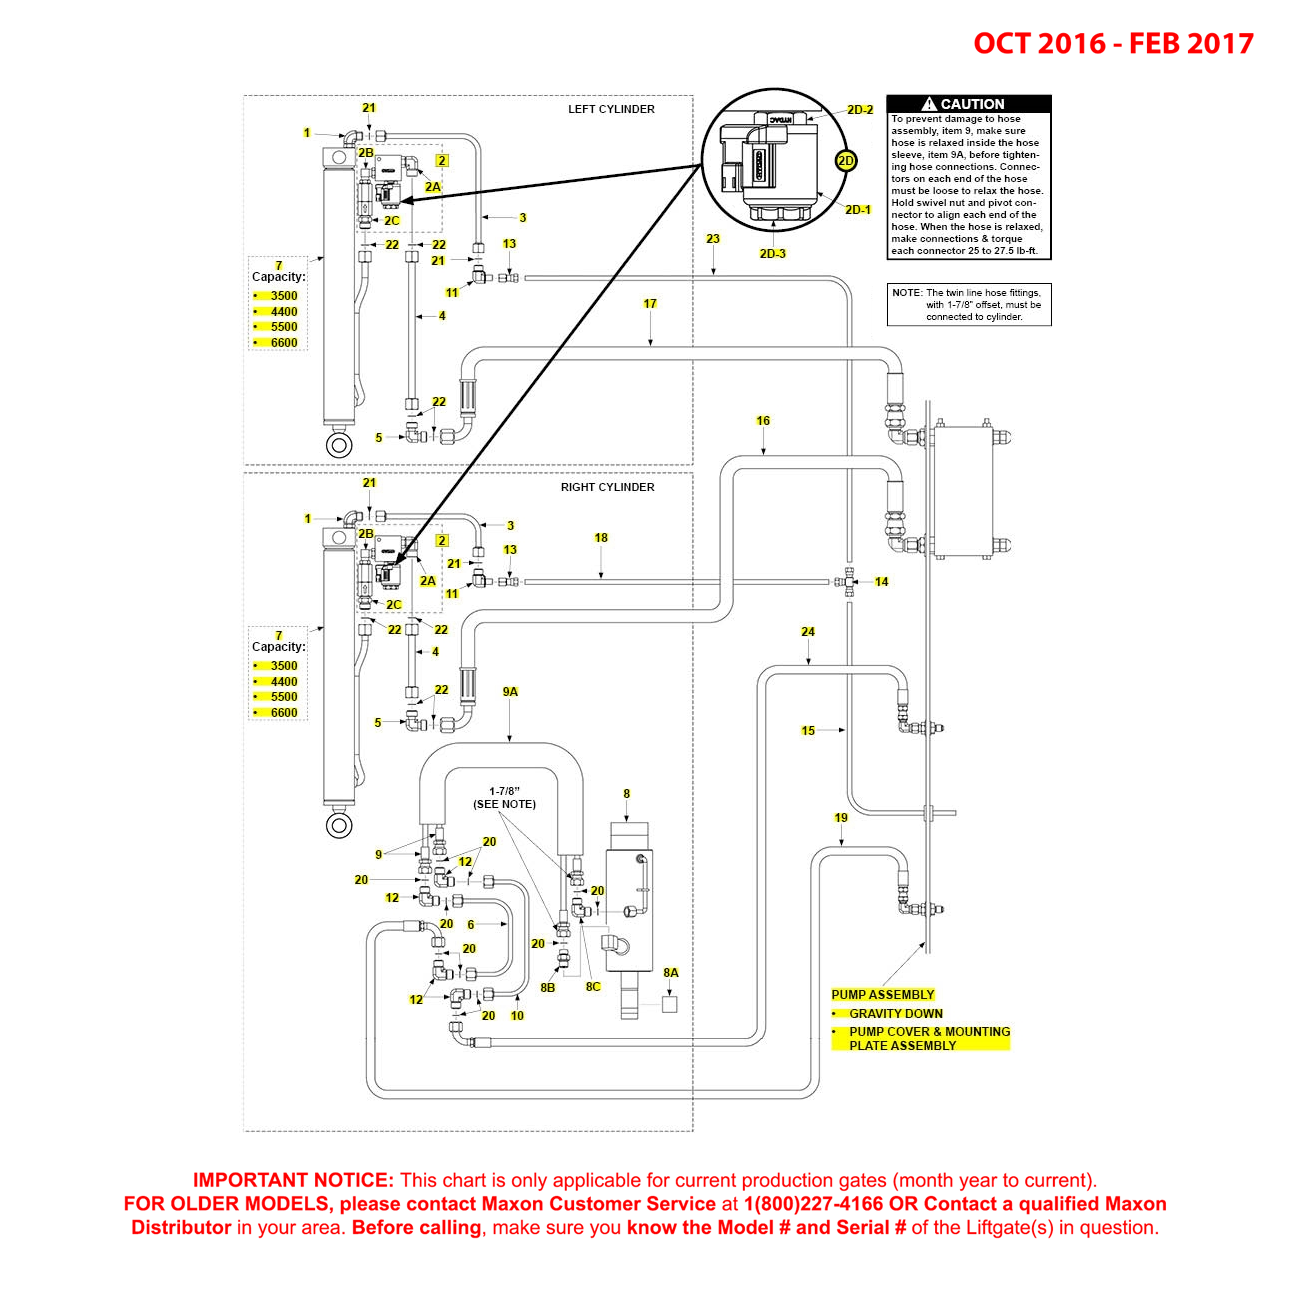 Maxon BMR (Oct 2016 - Feb 2017) Gravity Down MTE Hydraulics Systems Diagram